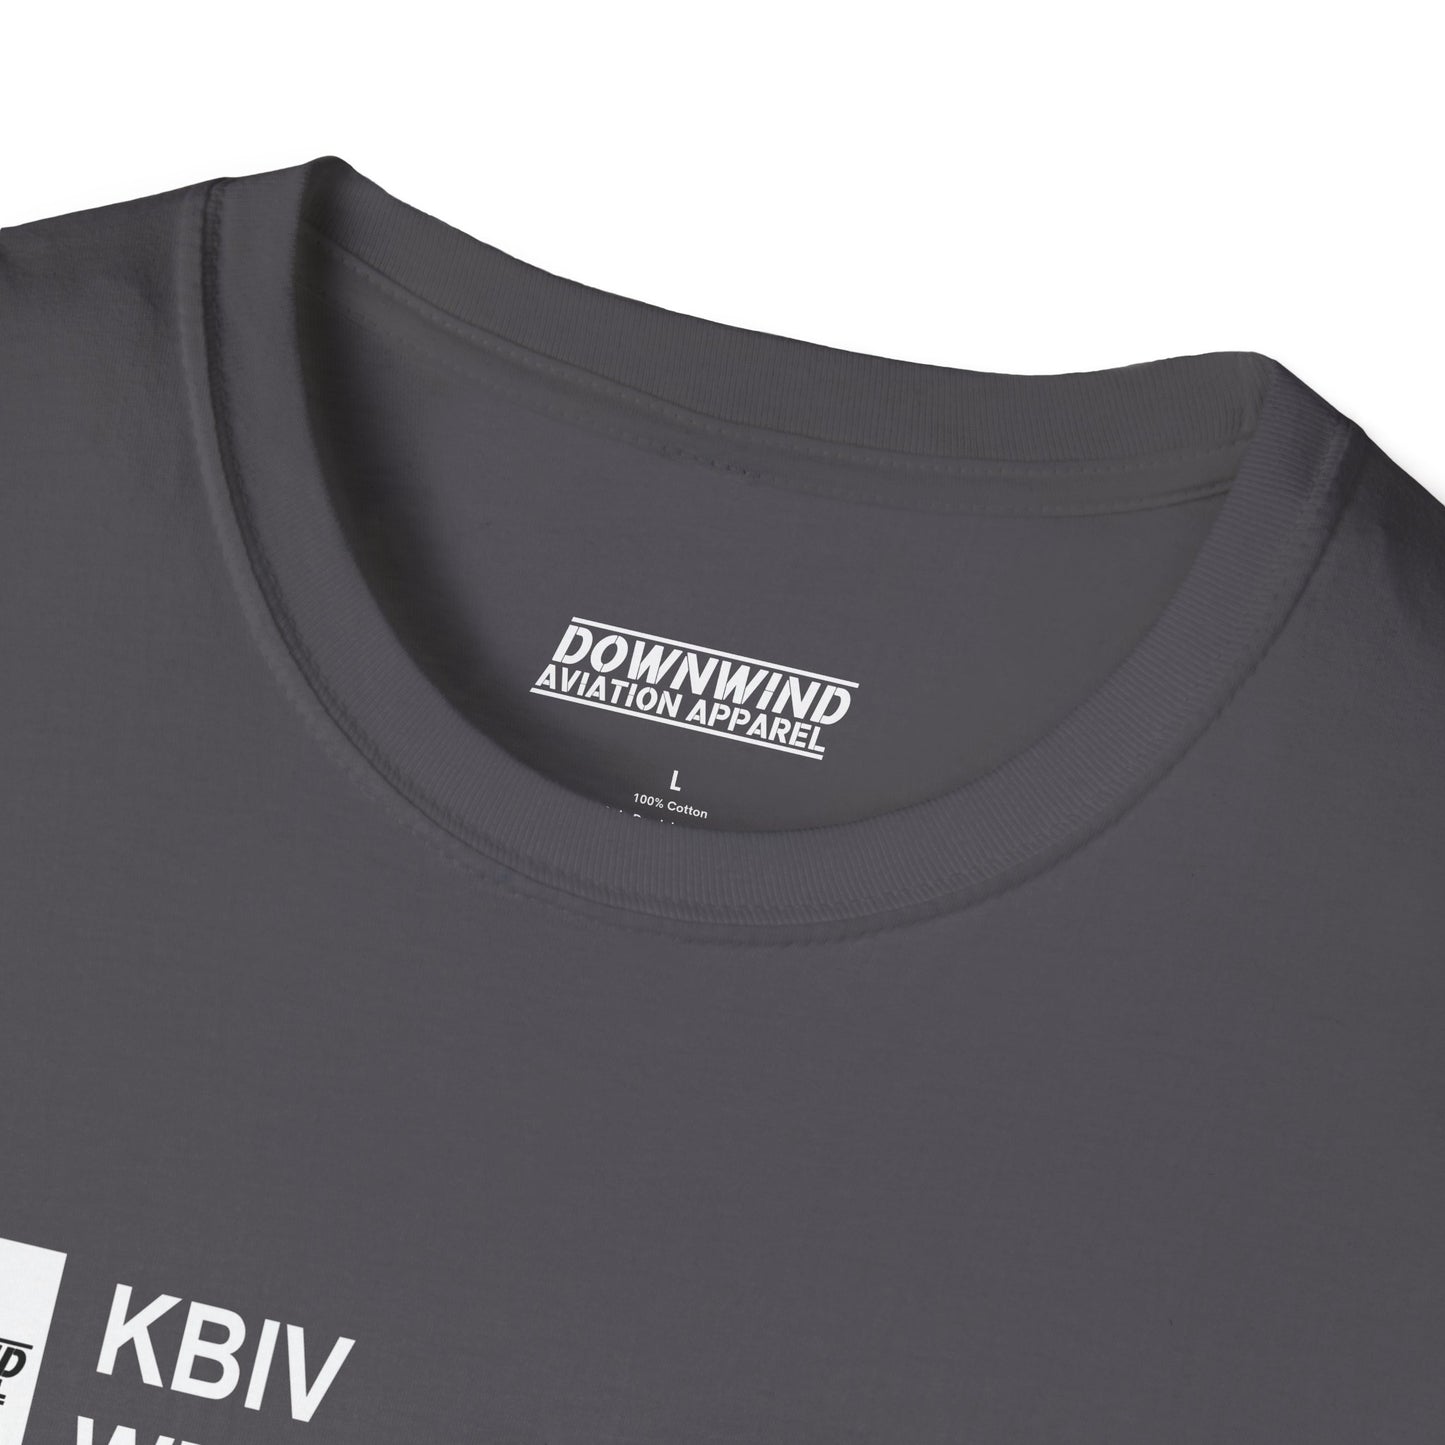 KBIV / West Michigan T-Shirt